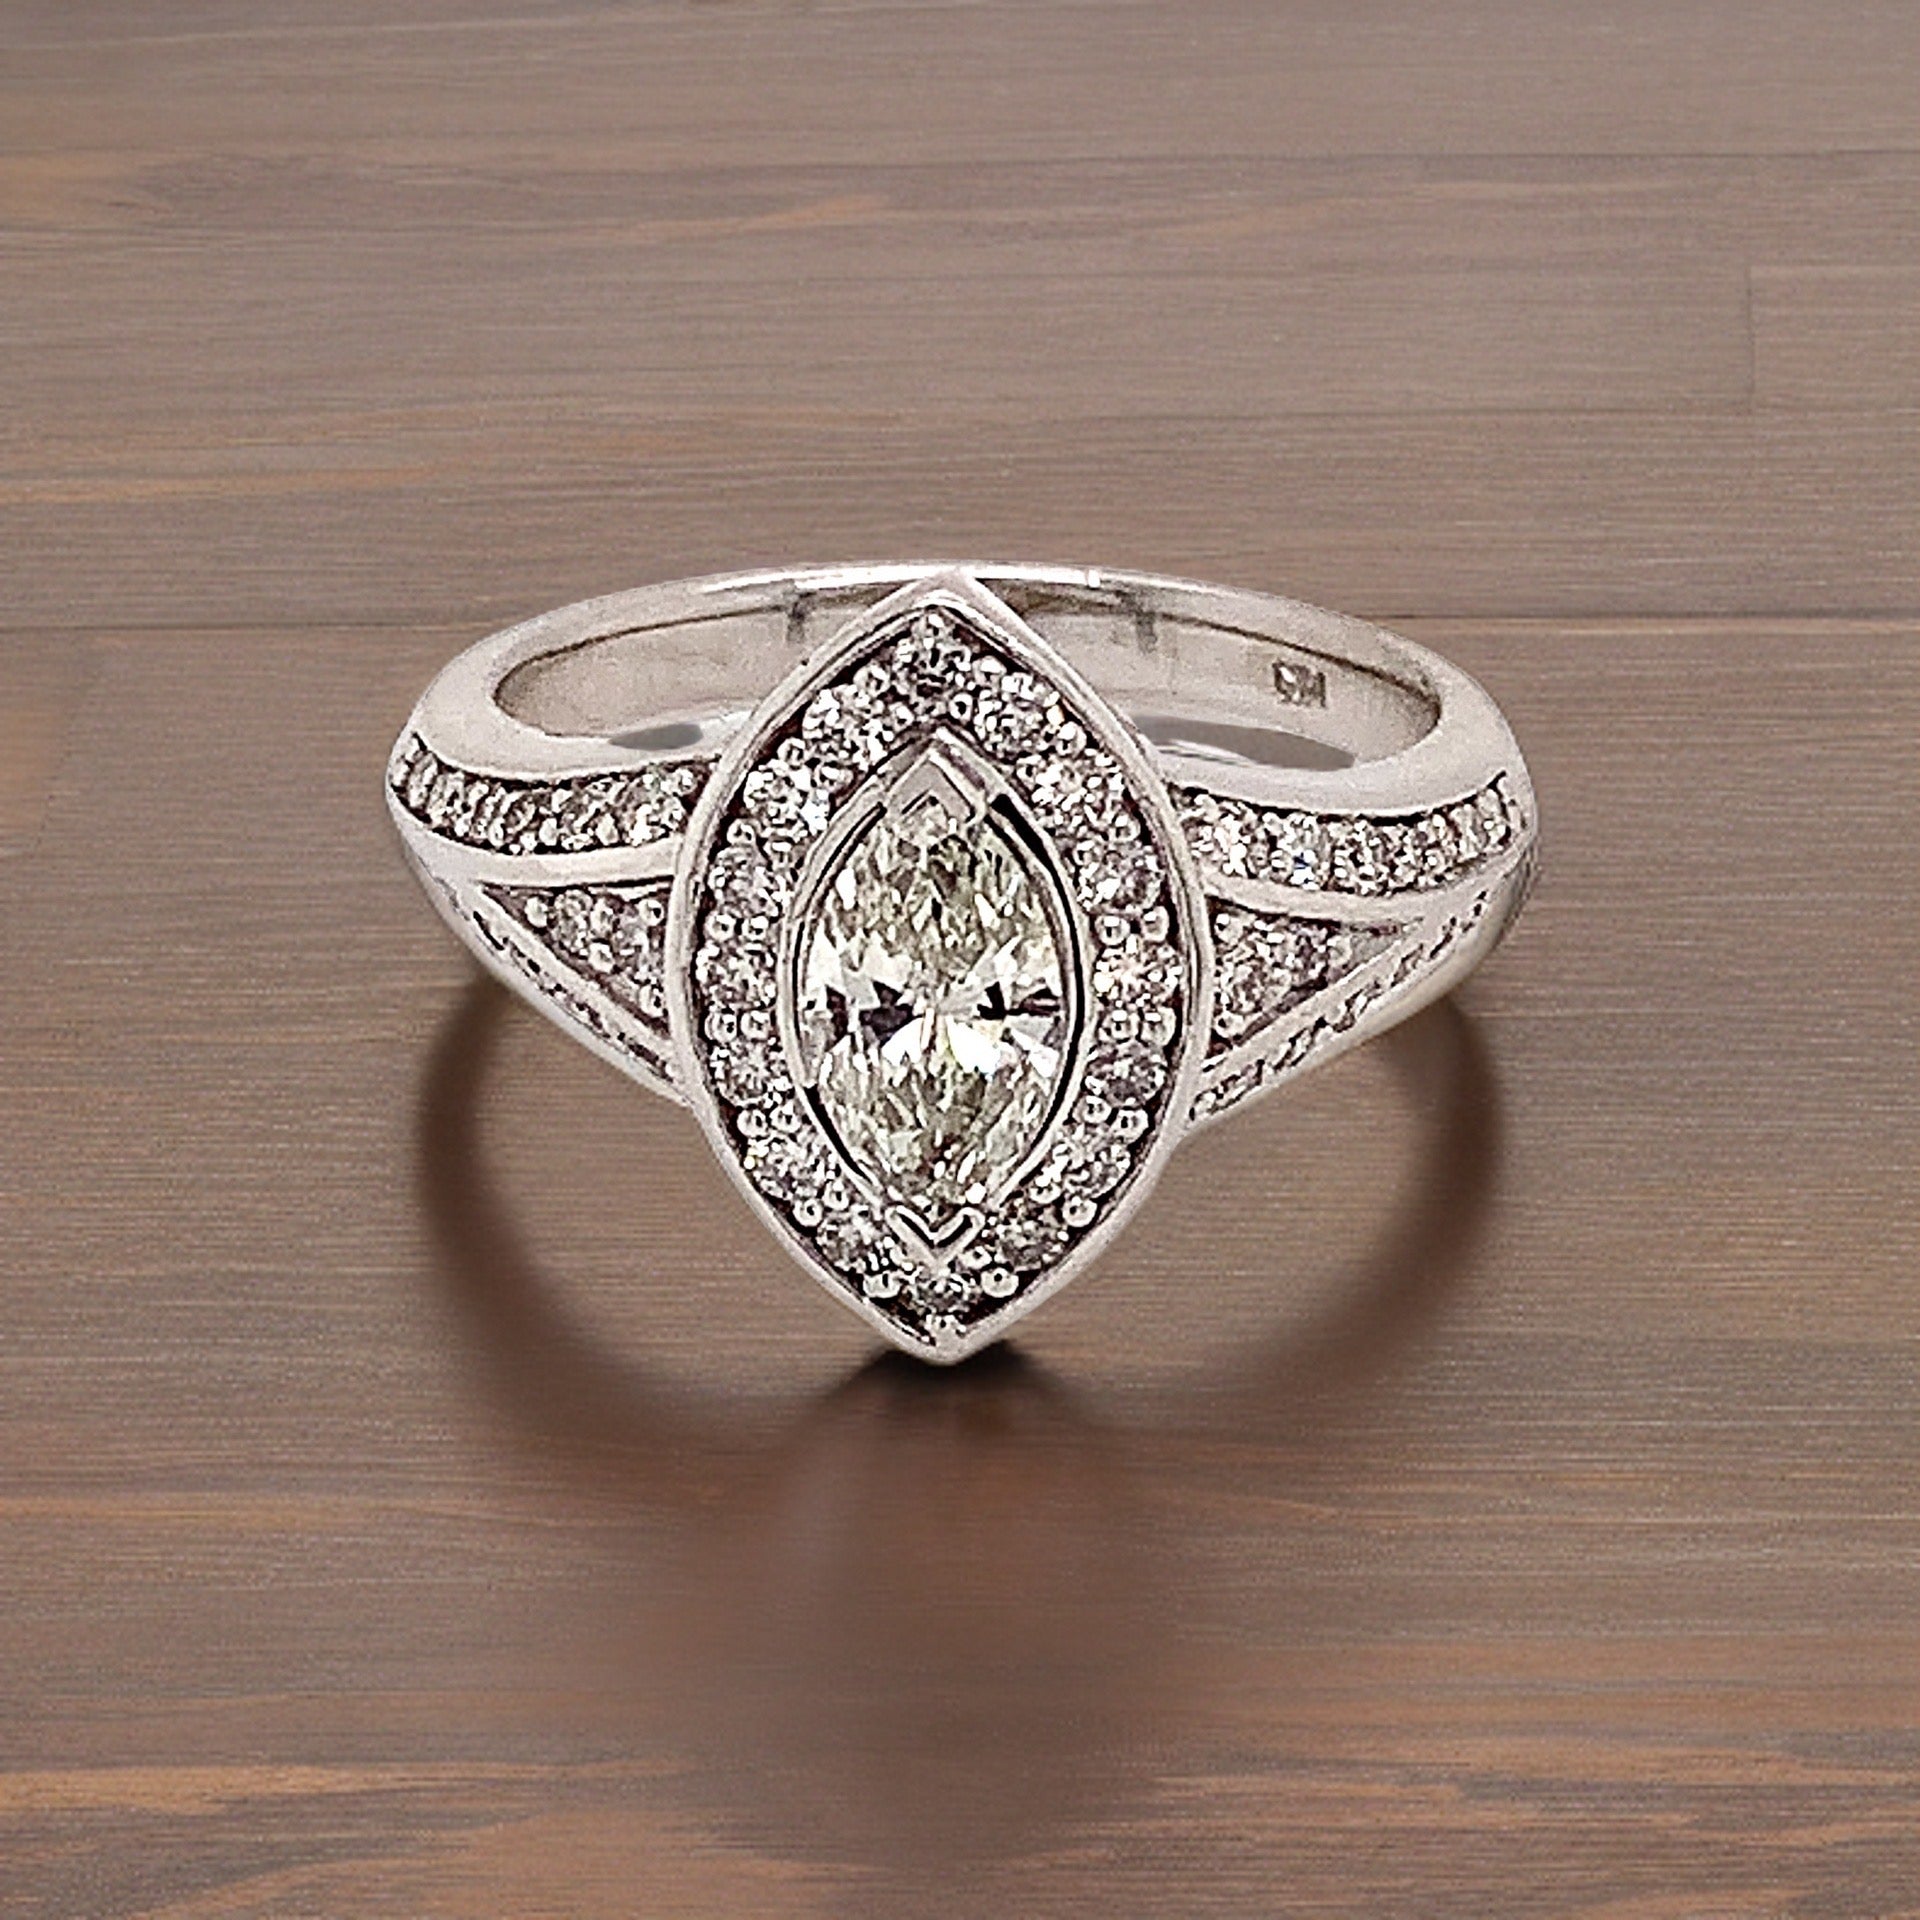 Diamond Ring Size 6.5 14k White Gold 0.45 TCW 4.88g Certified $5,950 120603 - Certified Fine Jewelry